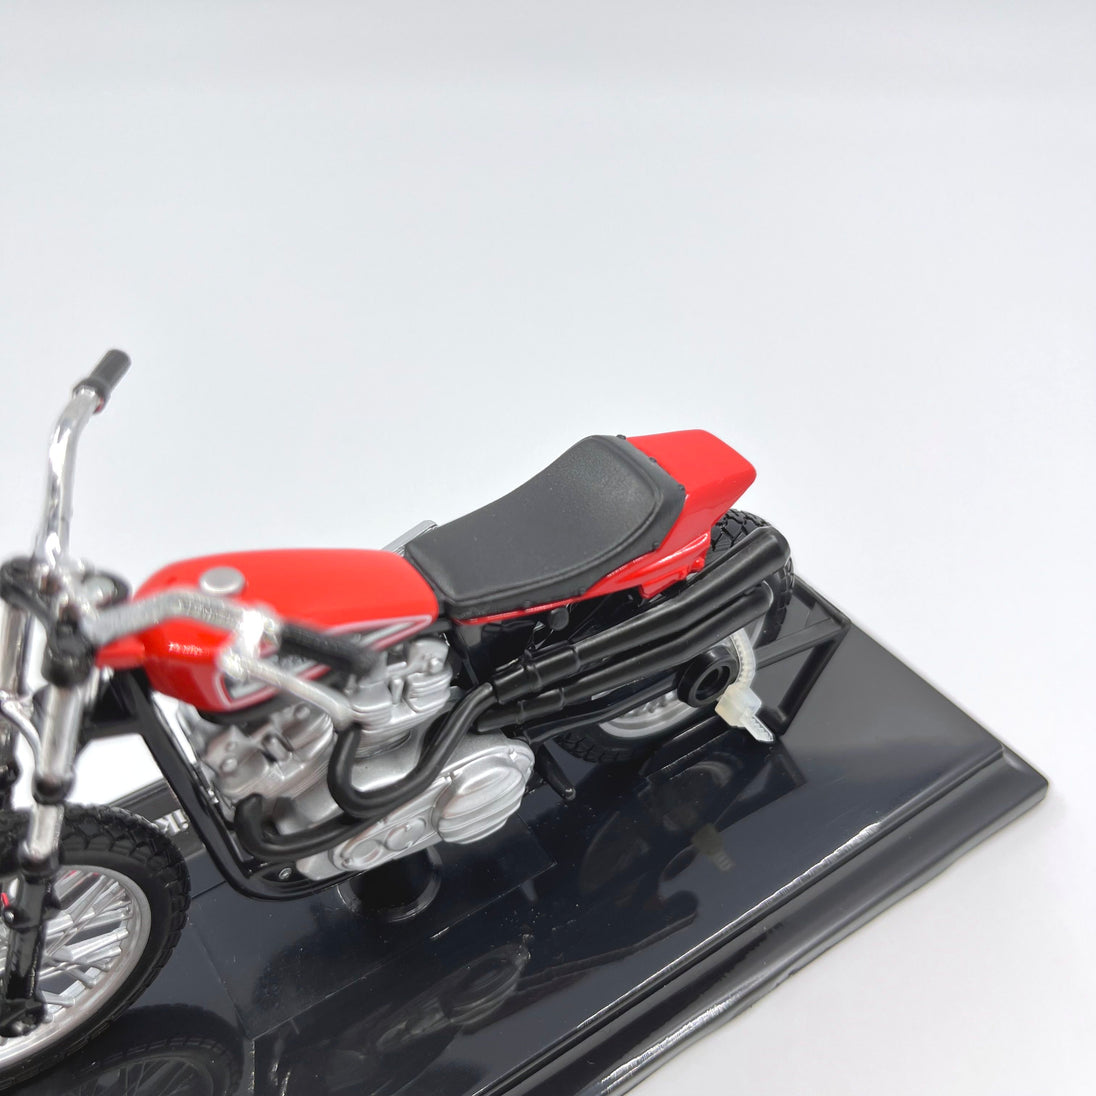 1972 Harley Davidson XR750 Racing Bike Diecast Bike 1:18 Motorcycle Model By Maisto